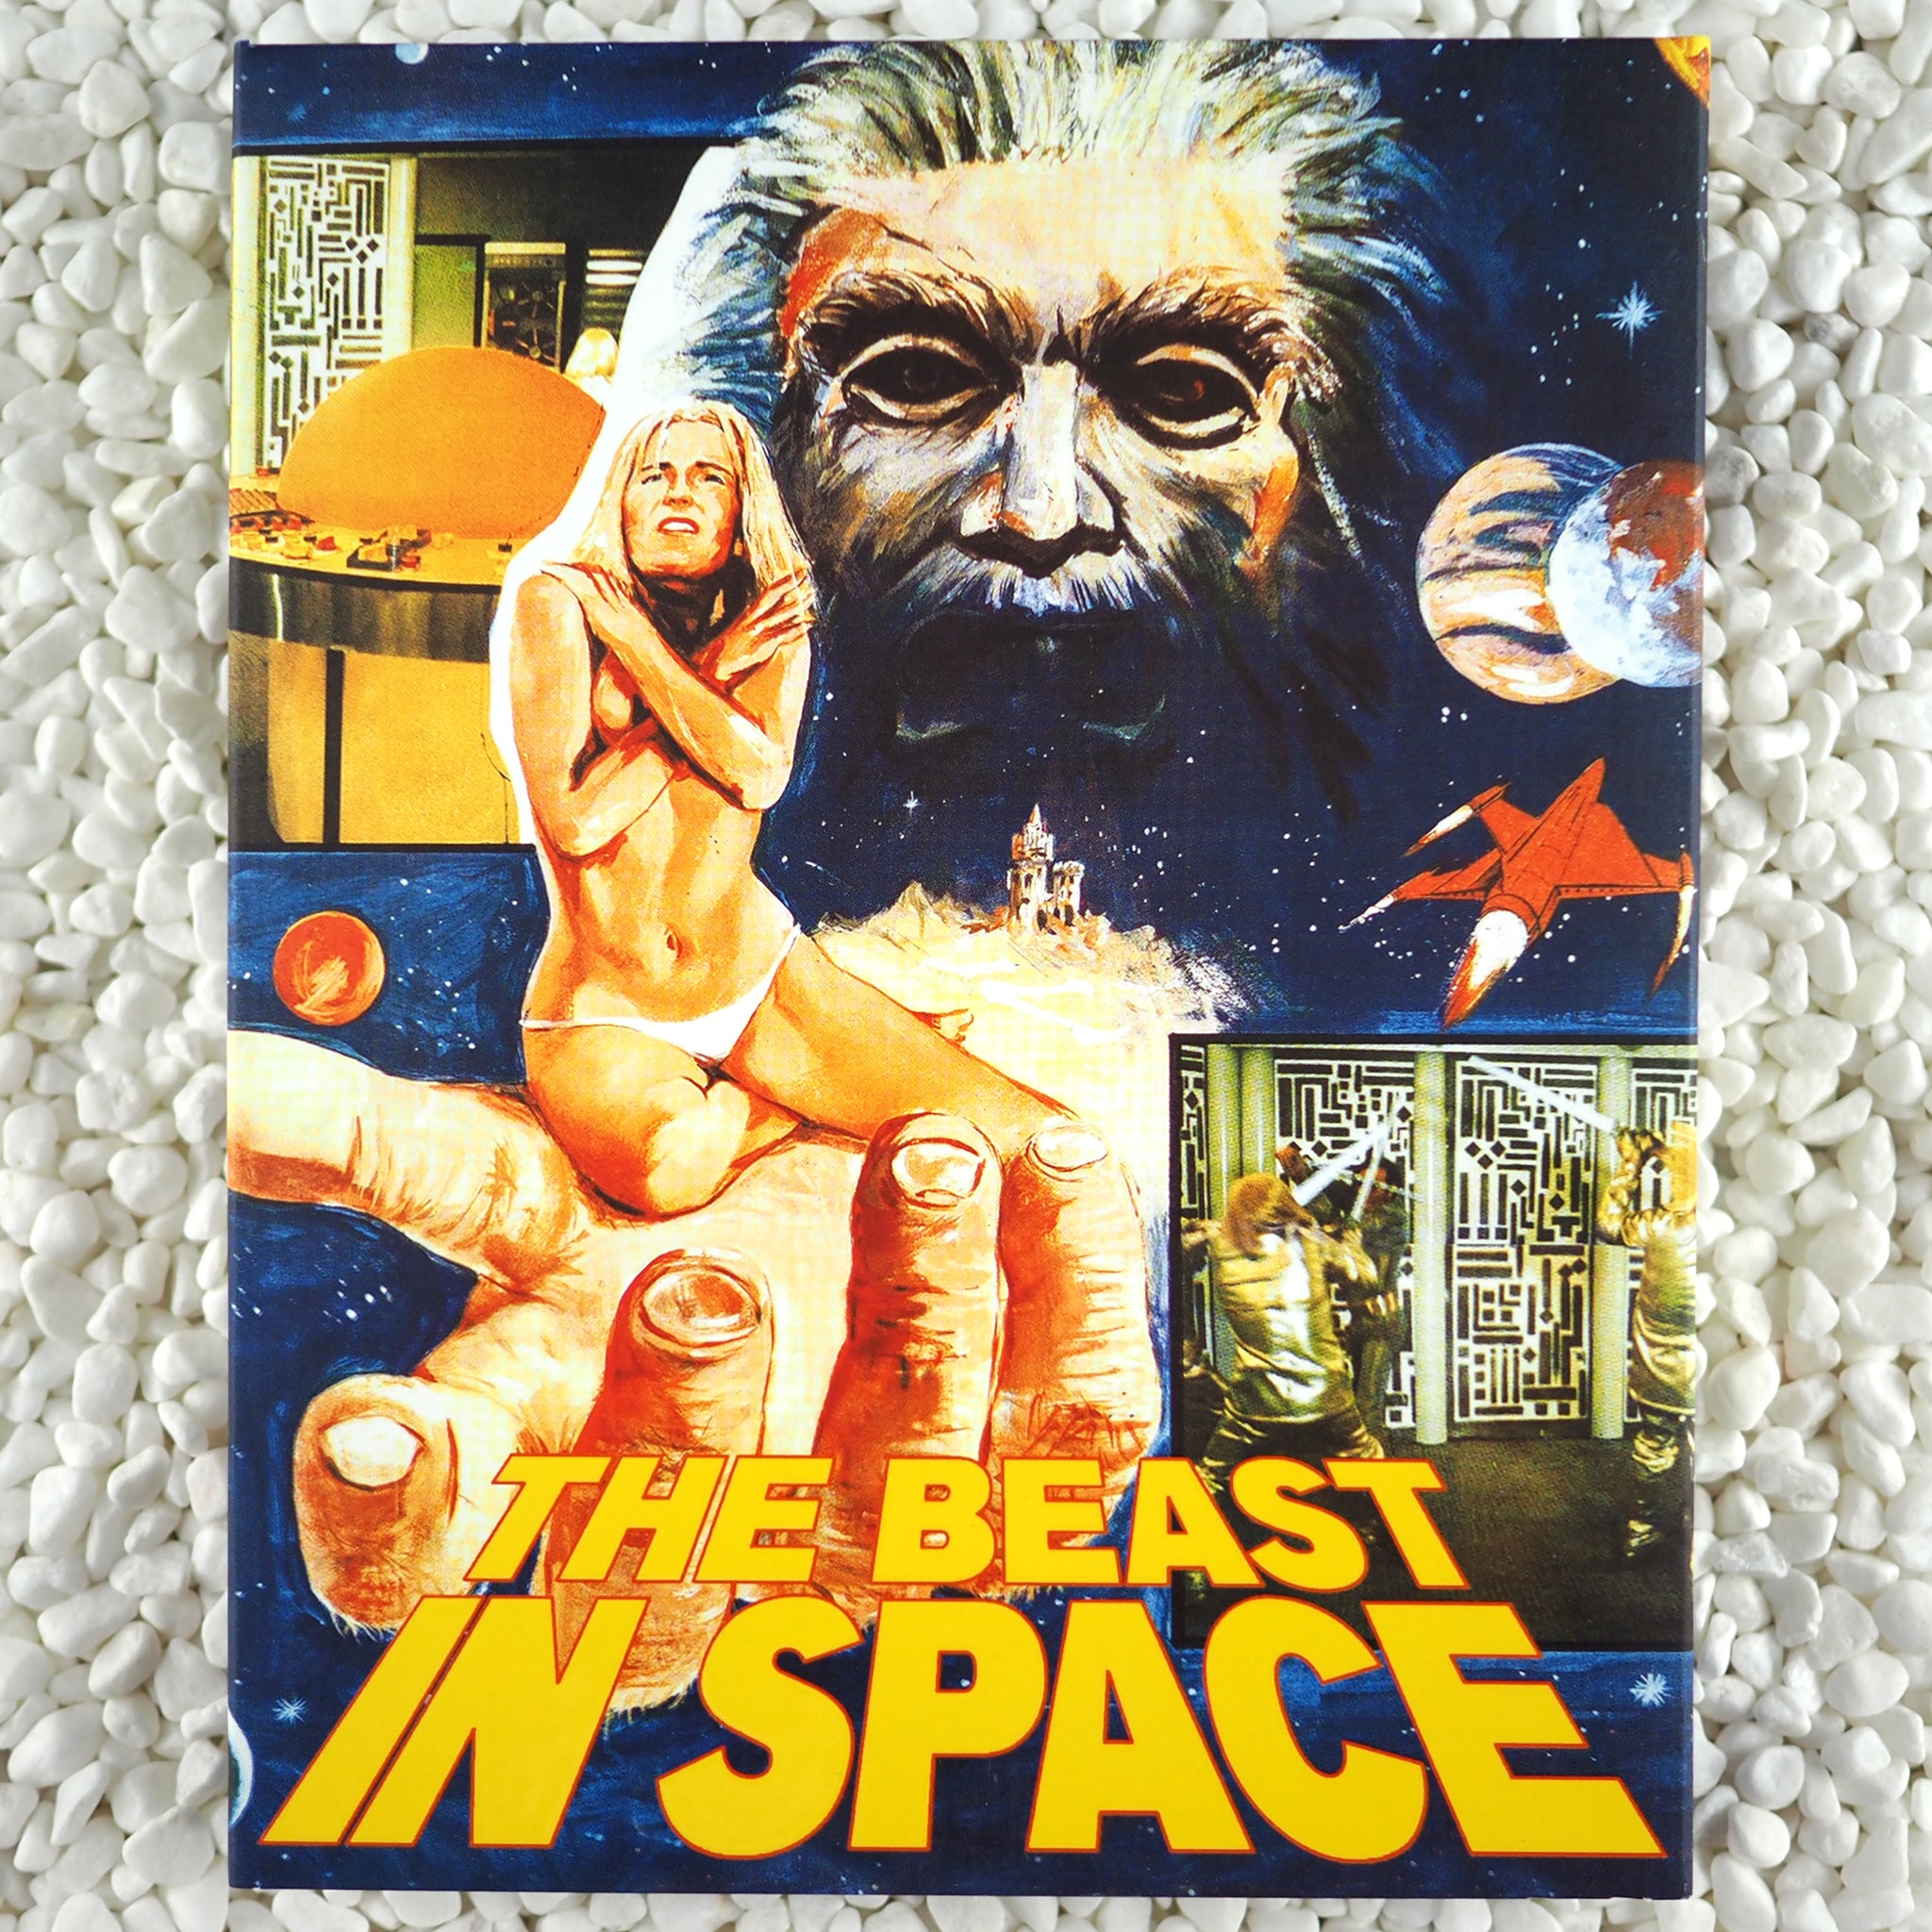 carla lebita recommends beast in space movie pic